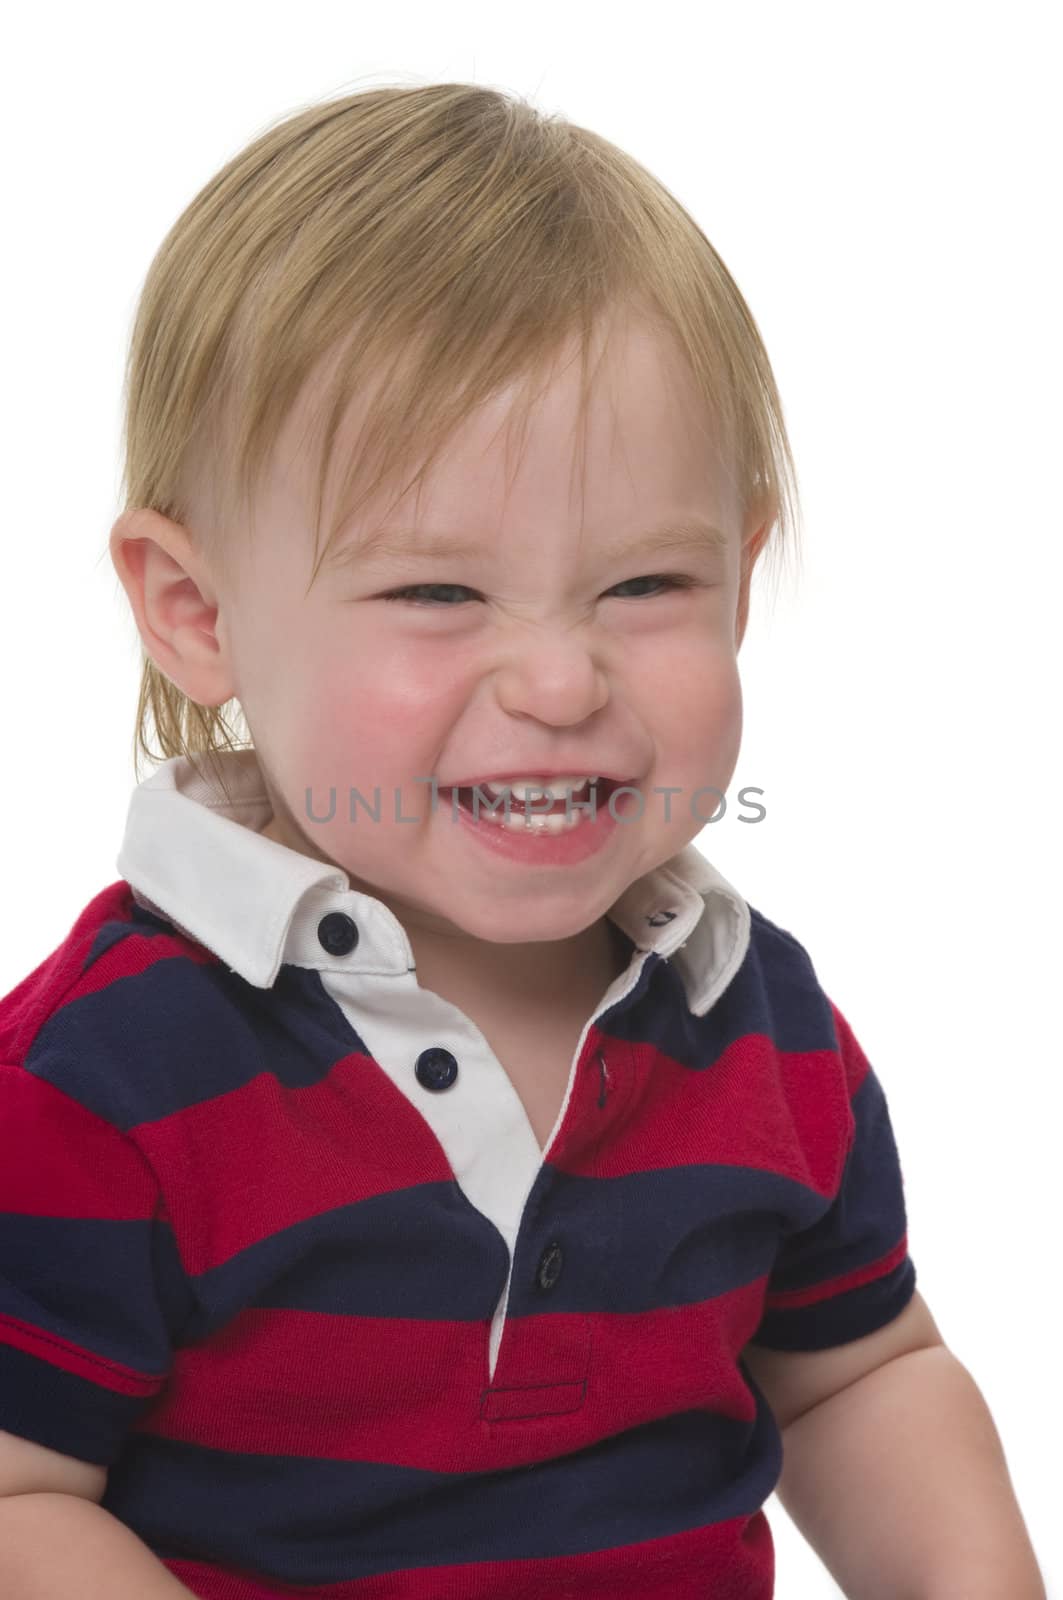 Very cute baby boy laughing